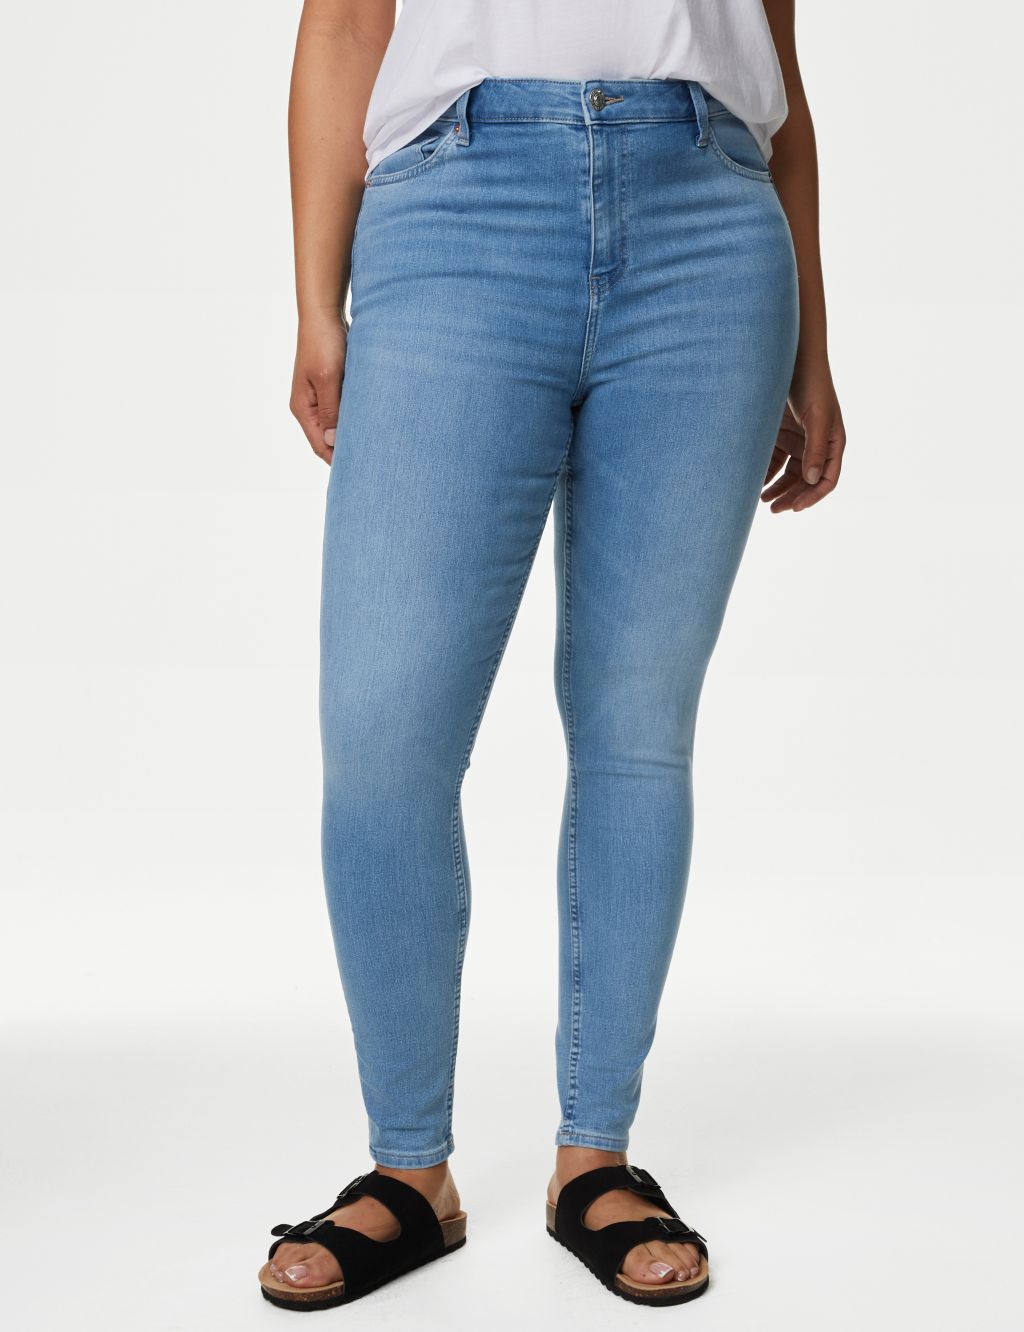 Ivy Skinny Jeans image 3